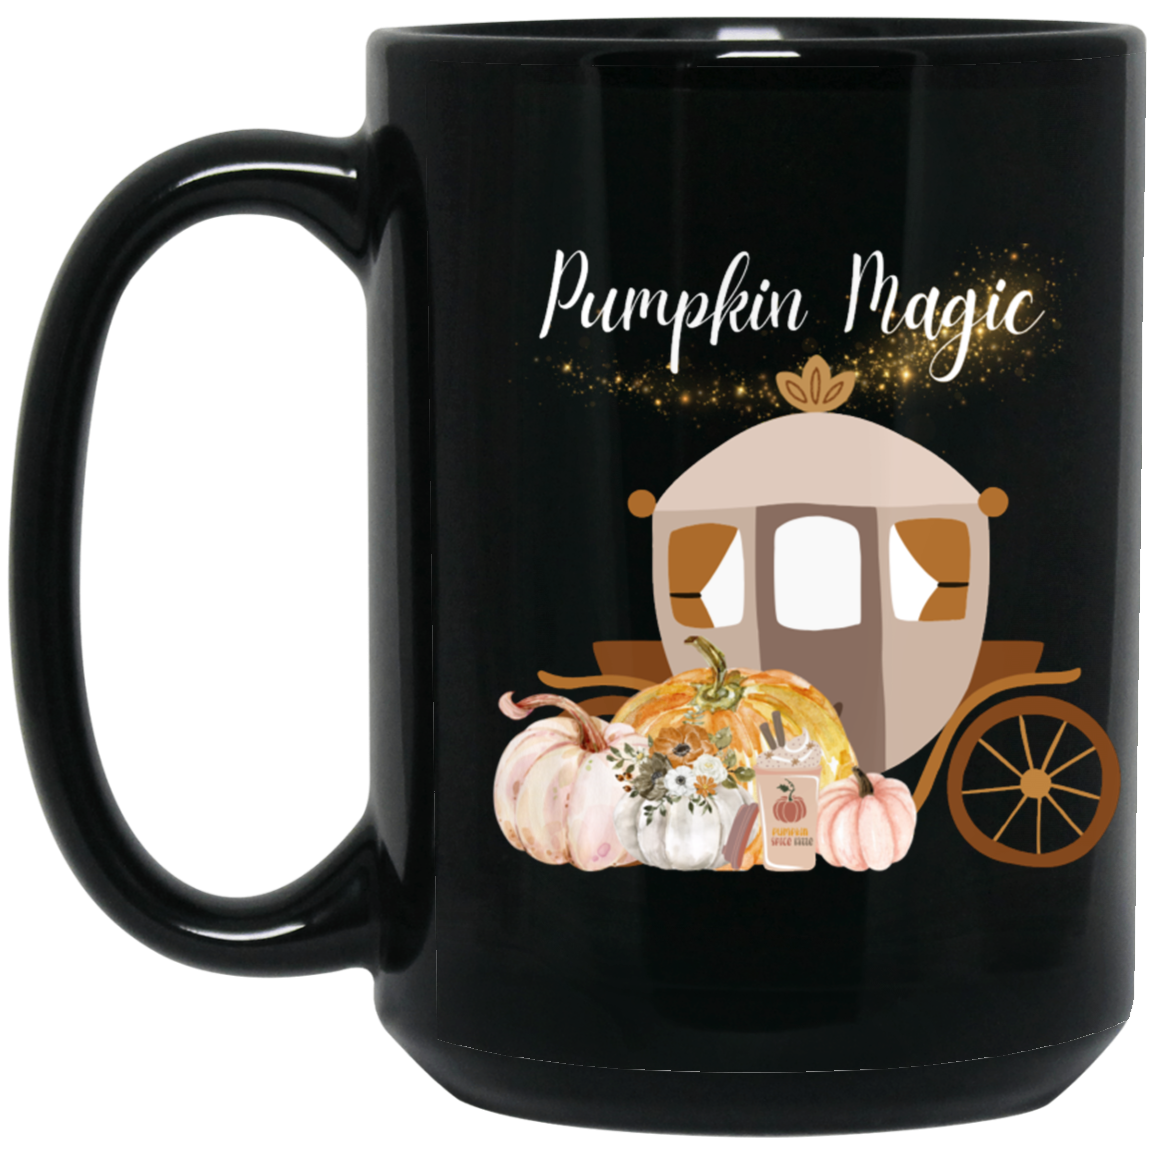 Pumpkin Magic - 11 & 15 oz. Black Mug